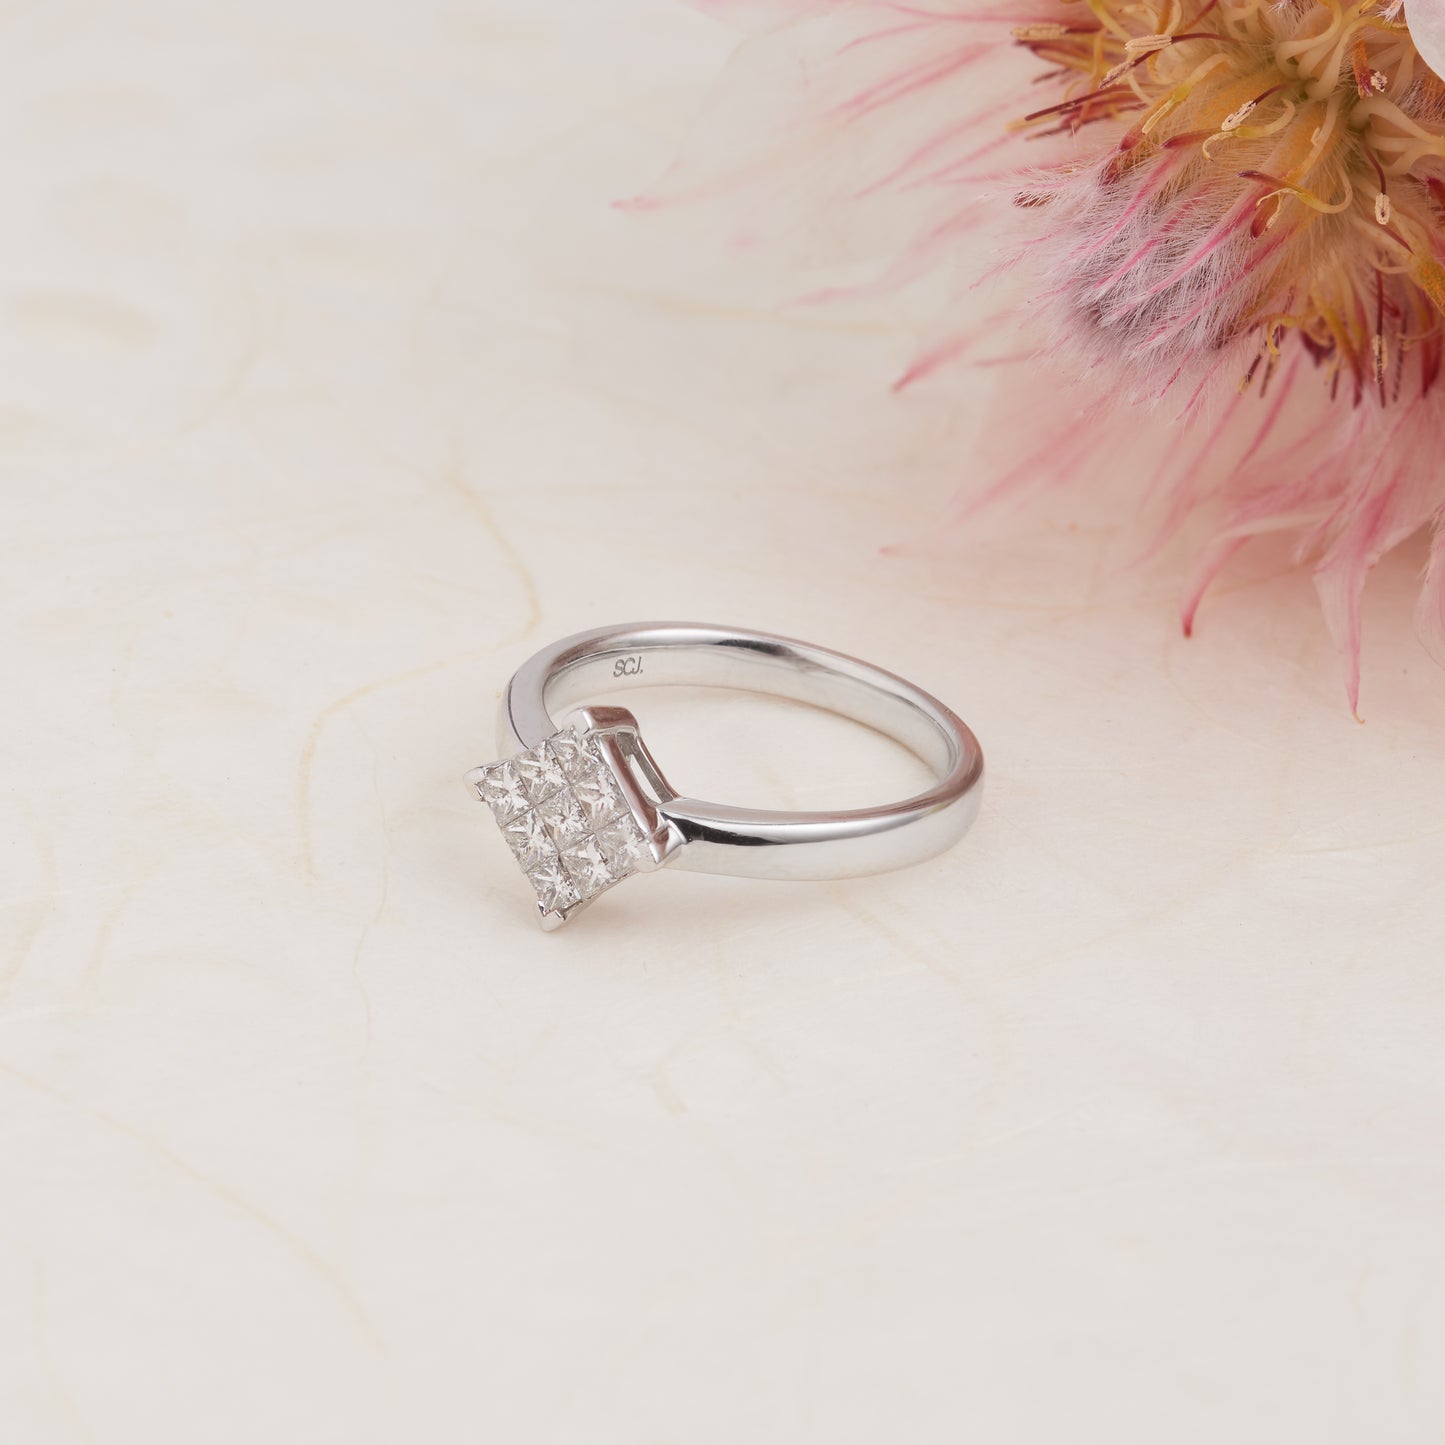 9K White Gold Princess Cut Diamond Angled Cluster Engagement Ring 0.55tdw